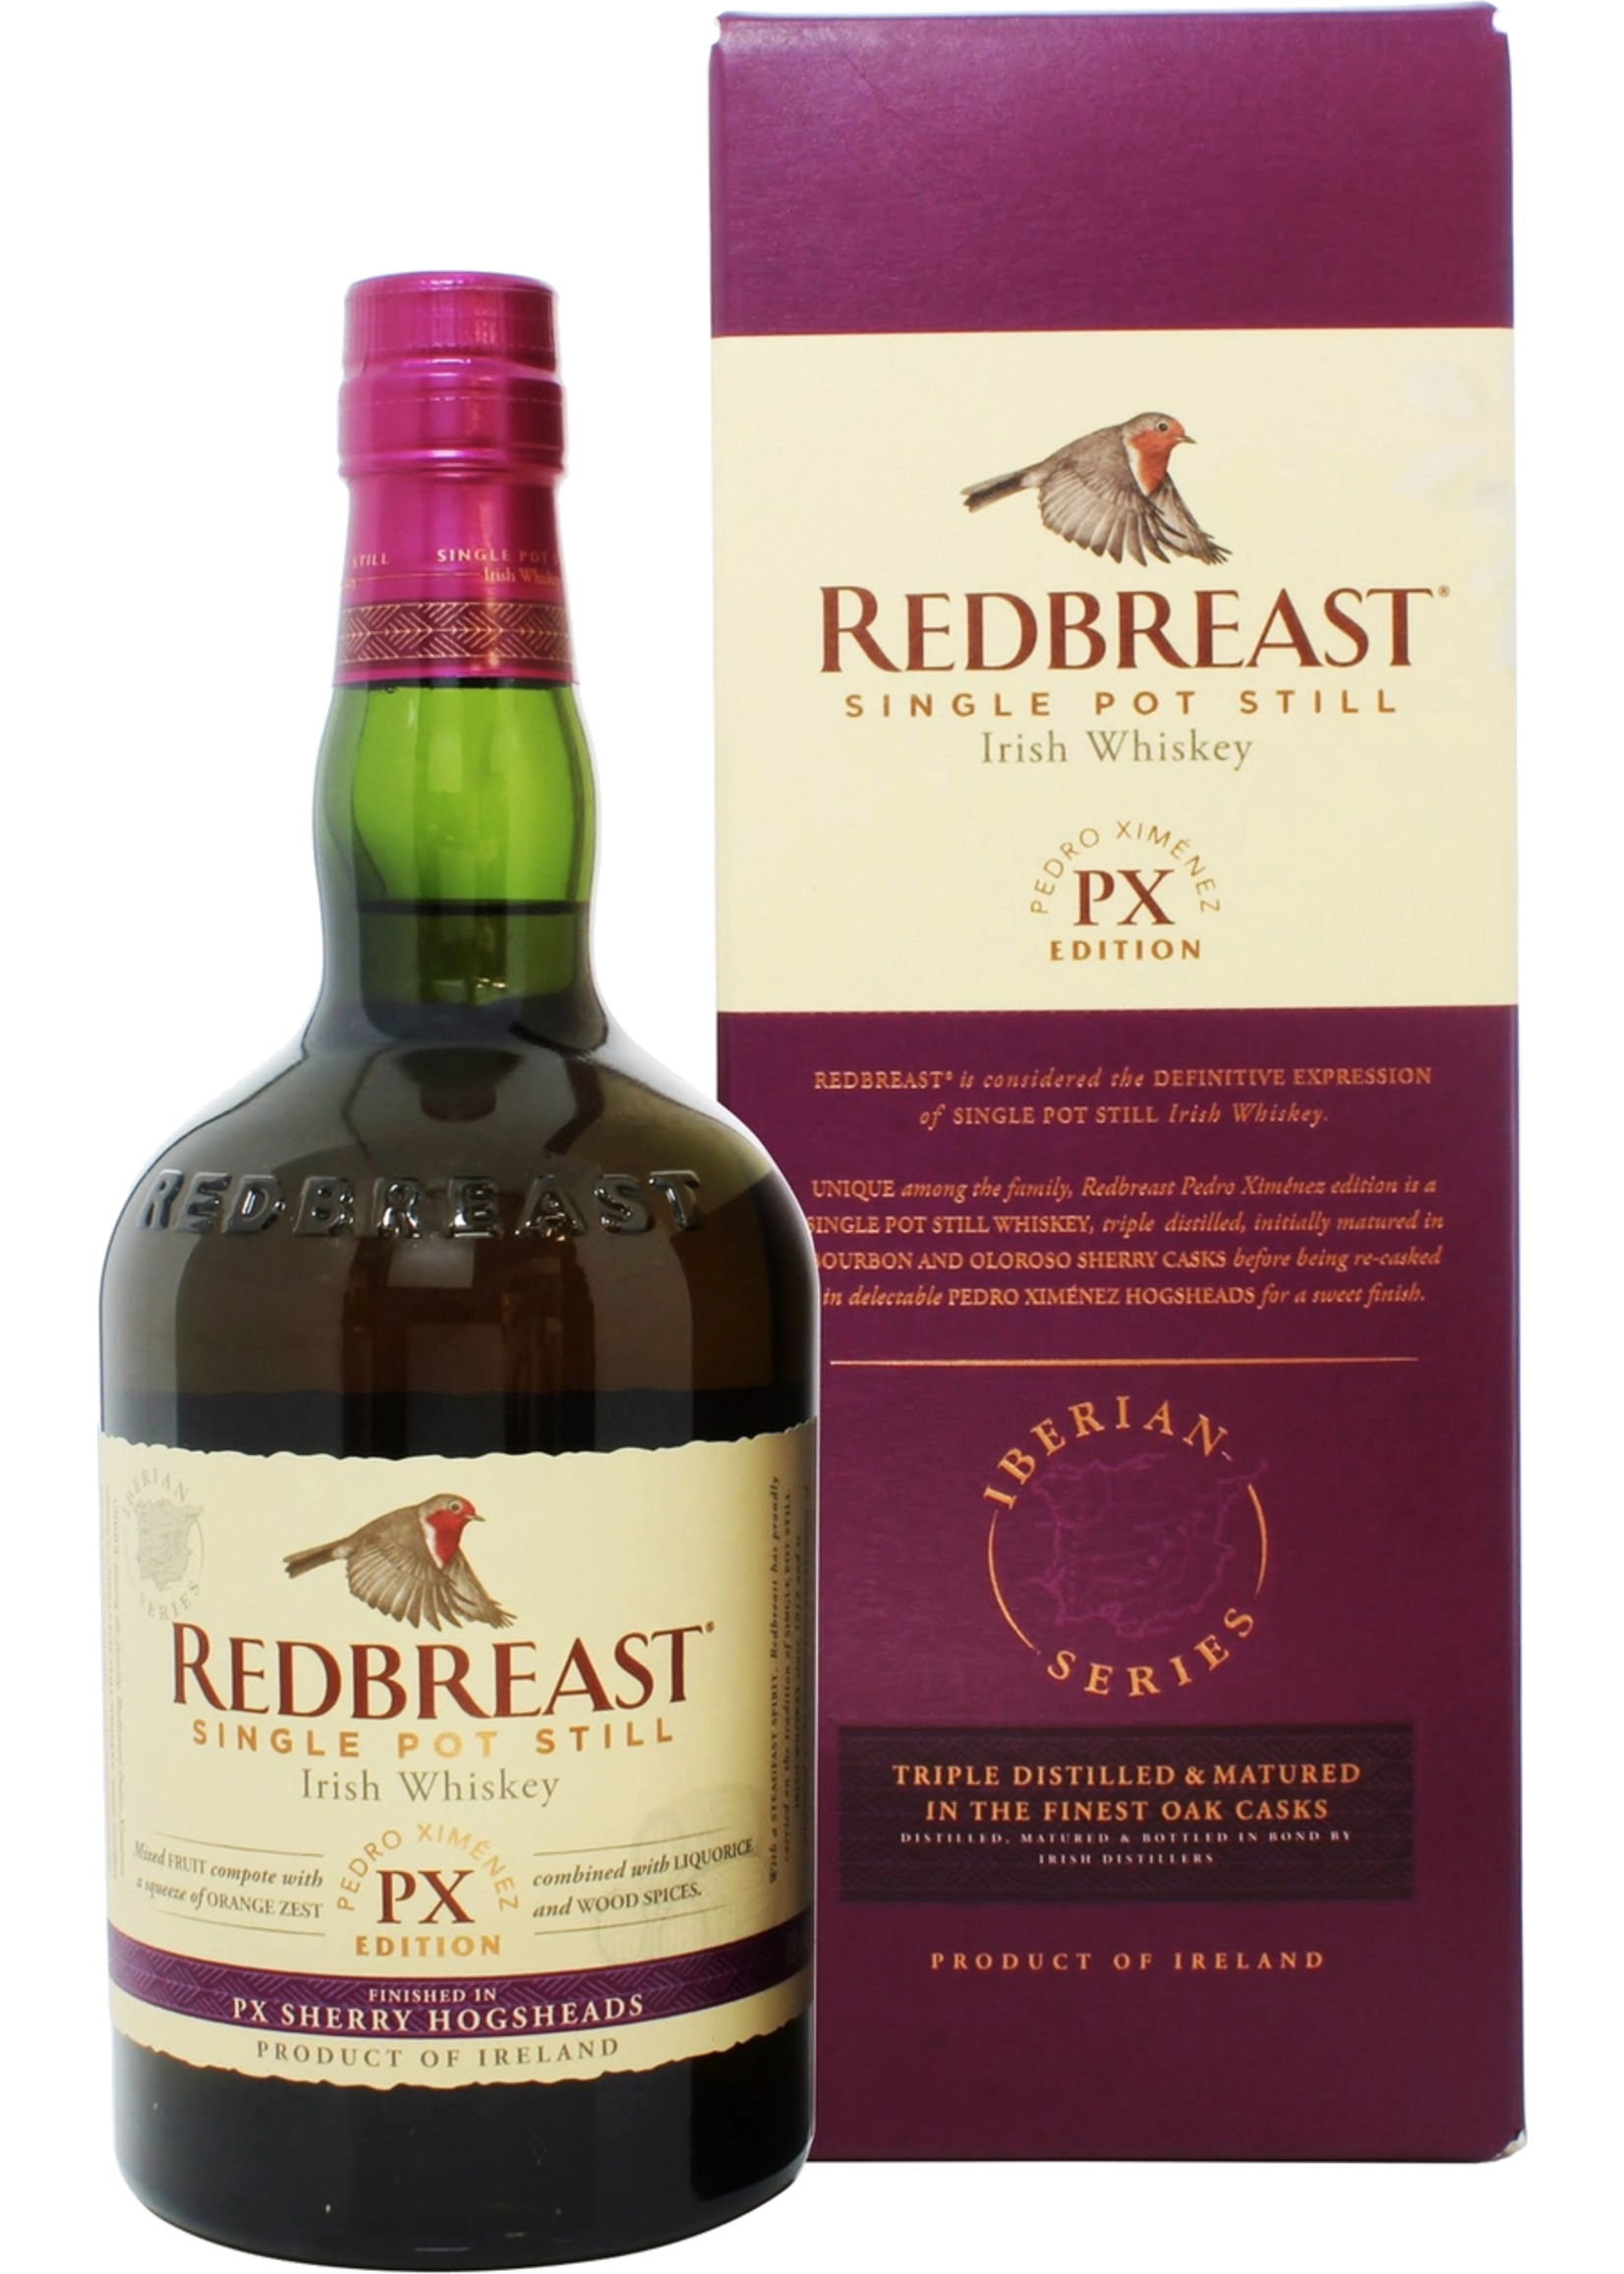 Redbreast Redbreast Whiskey / PX Edition Single Pot Still Irish Whiskey 92 Proof / 750mL